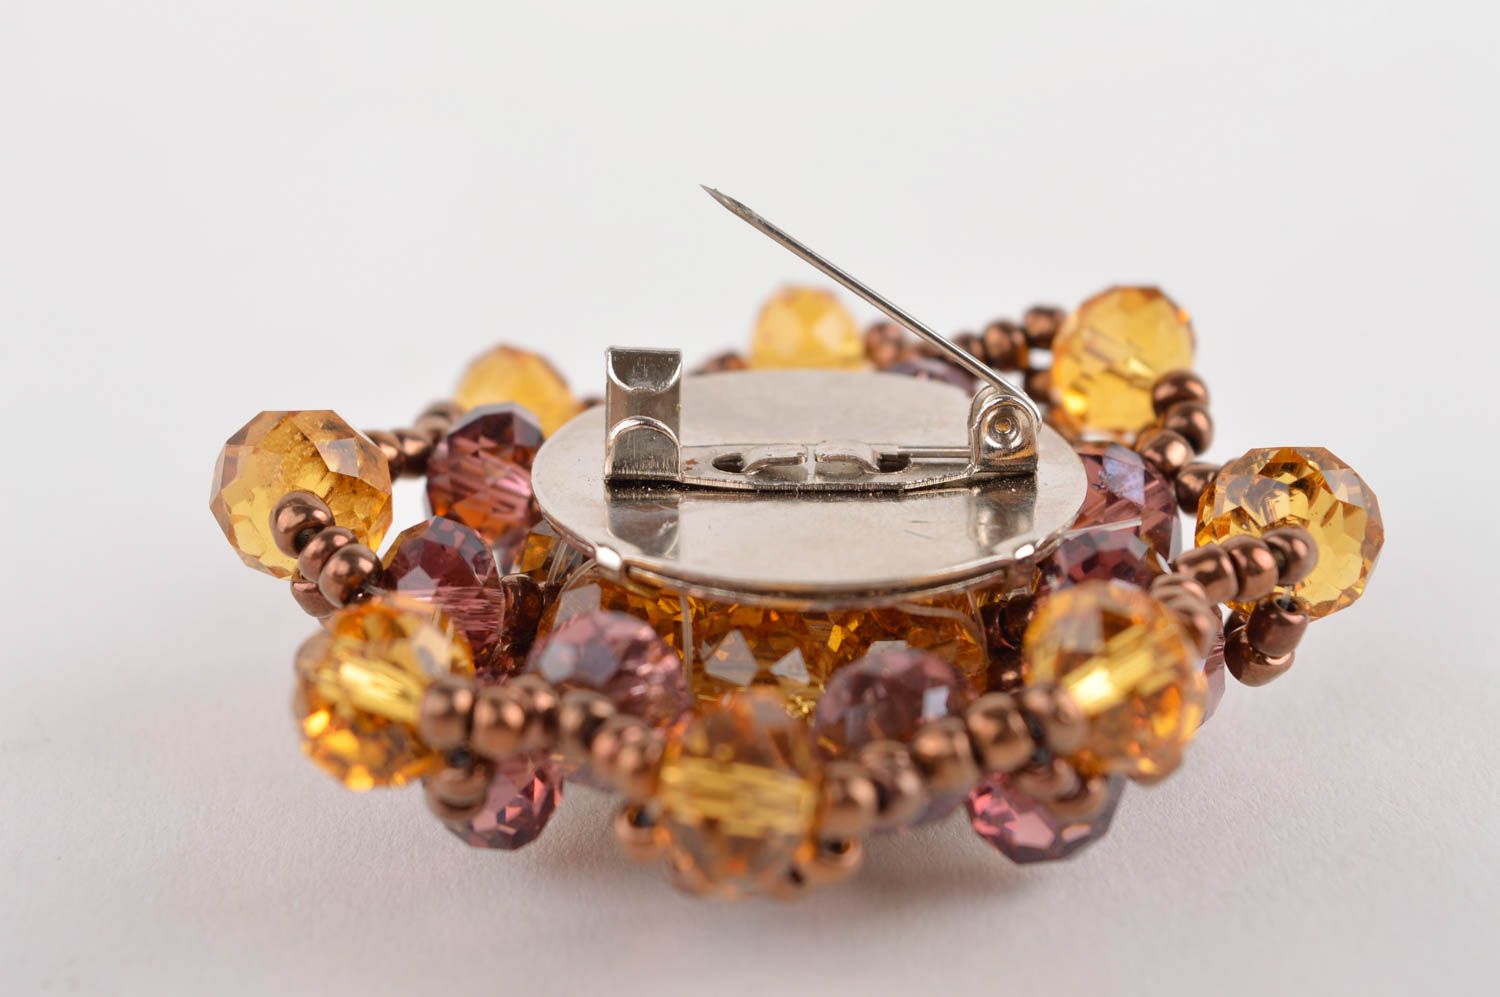 Stylish handmade beaded brooch jewelry artisan jewelry designs gifts for her photo 5